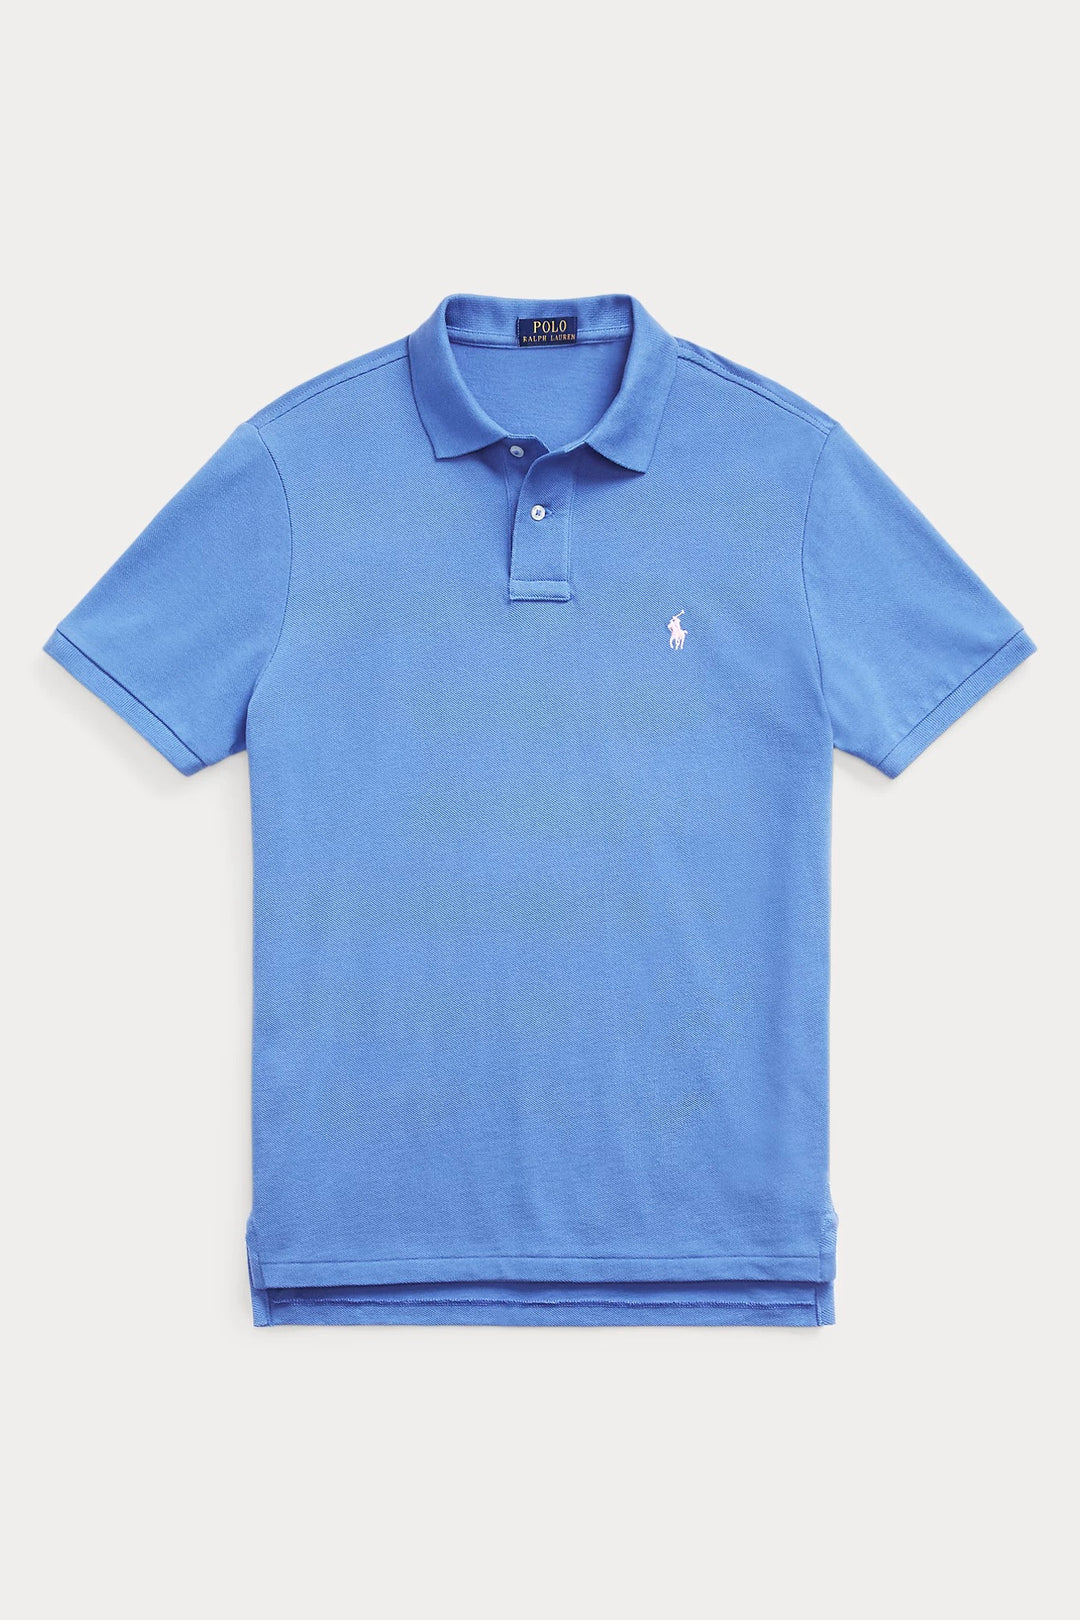 POLO RALPH LAUREN - Iconic Mesh Polo Shirt New England Blue - Dale